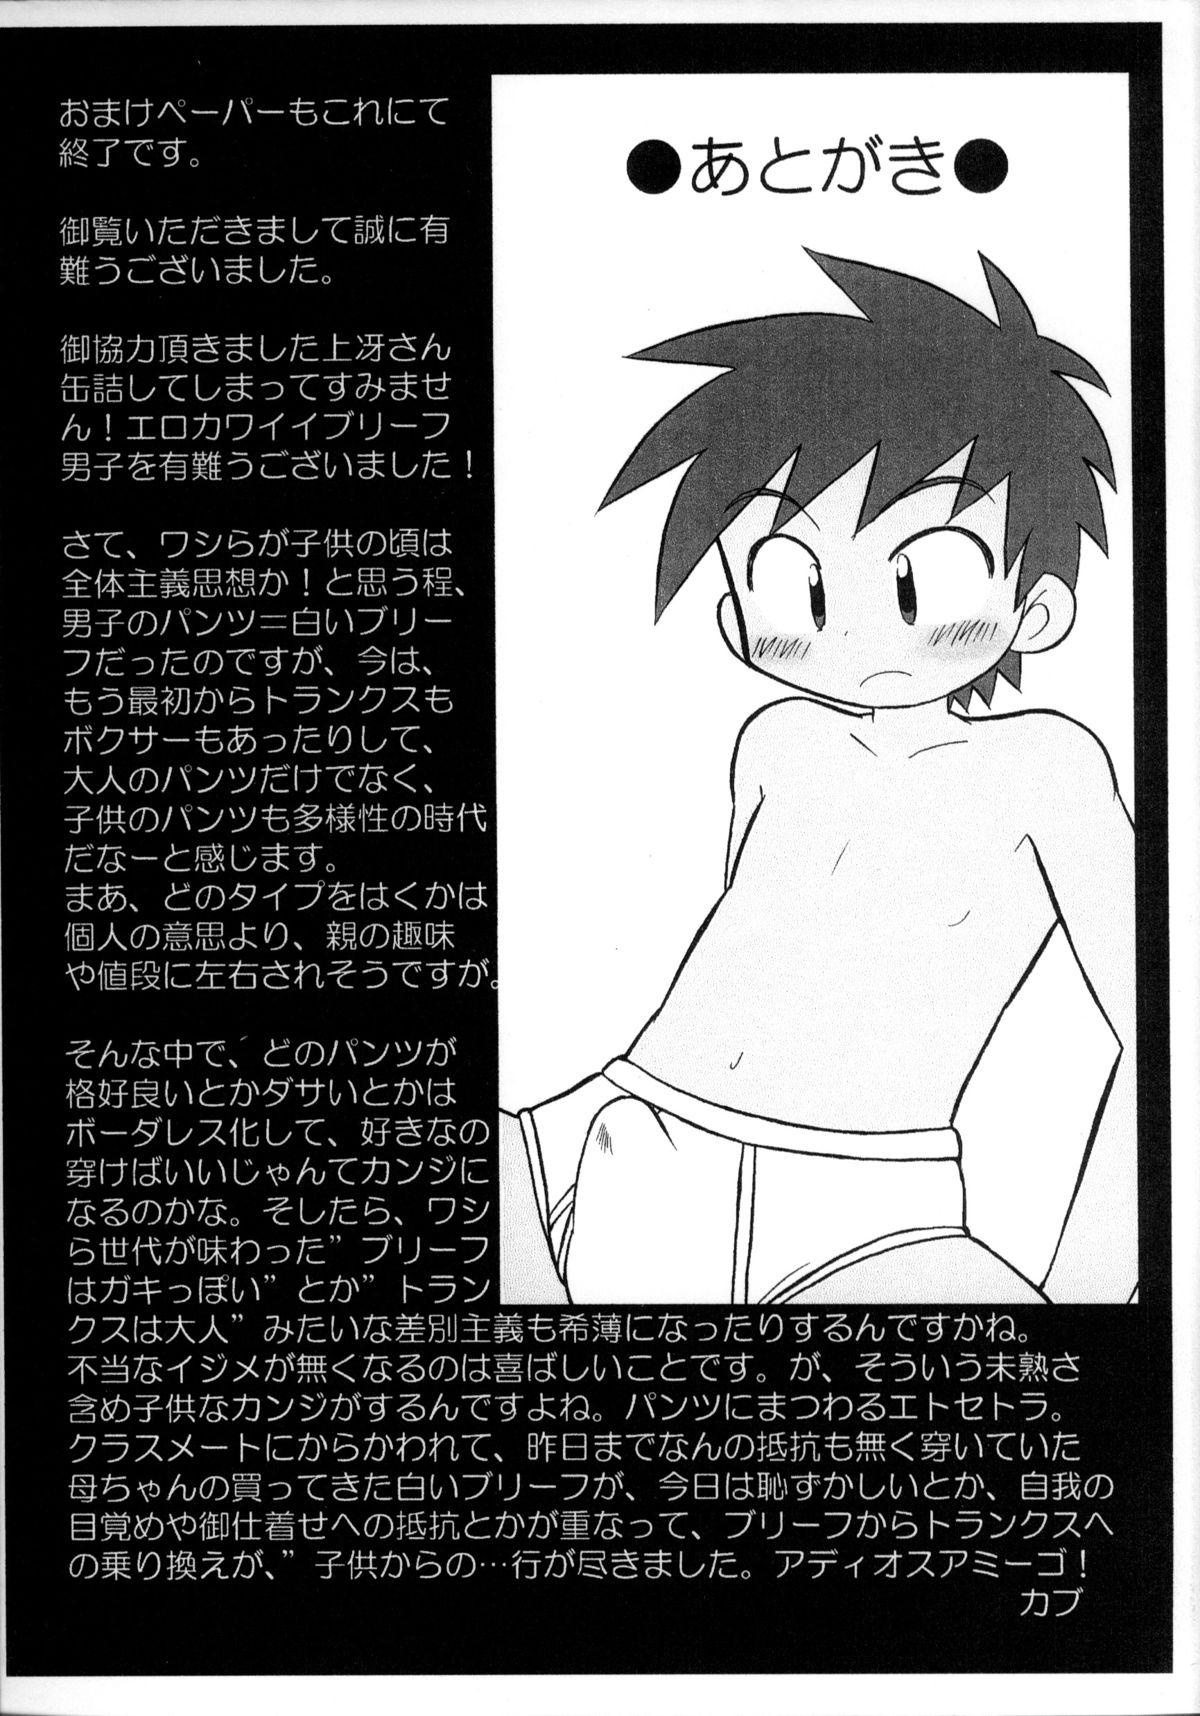 AnthologyShota Briefs Page 38 Of 39 hentai haven, AnthologyShota Briefs Pag...